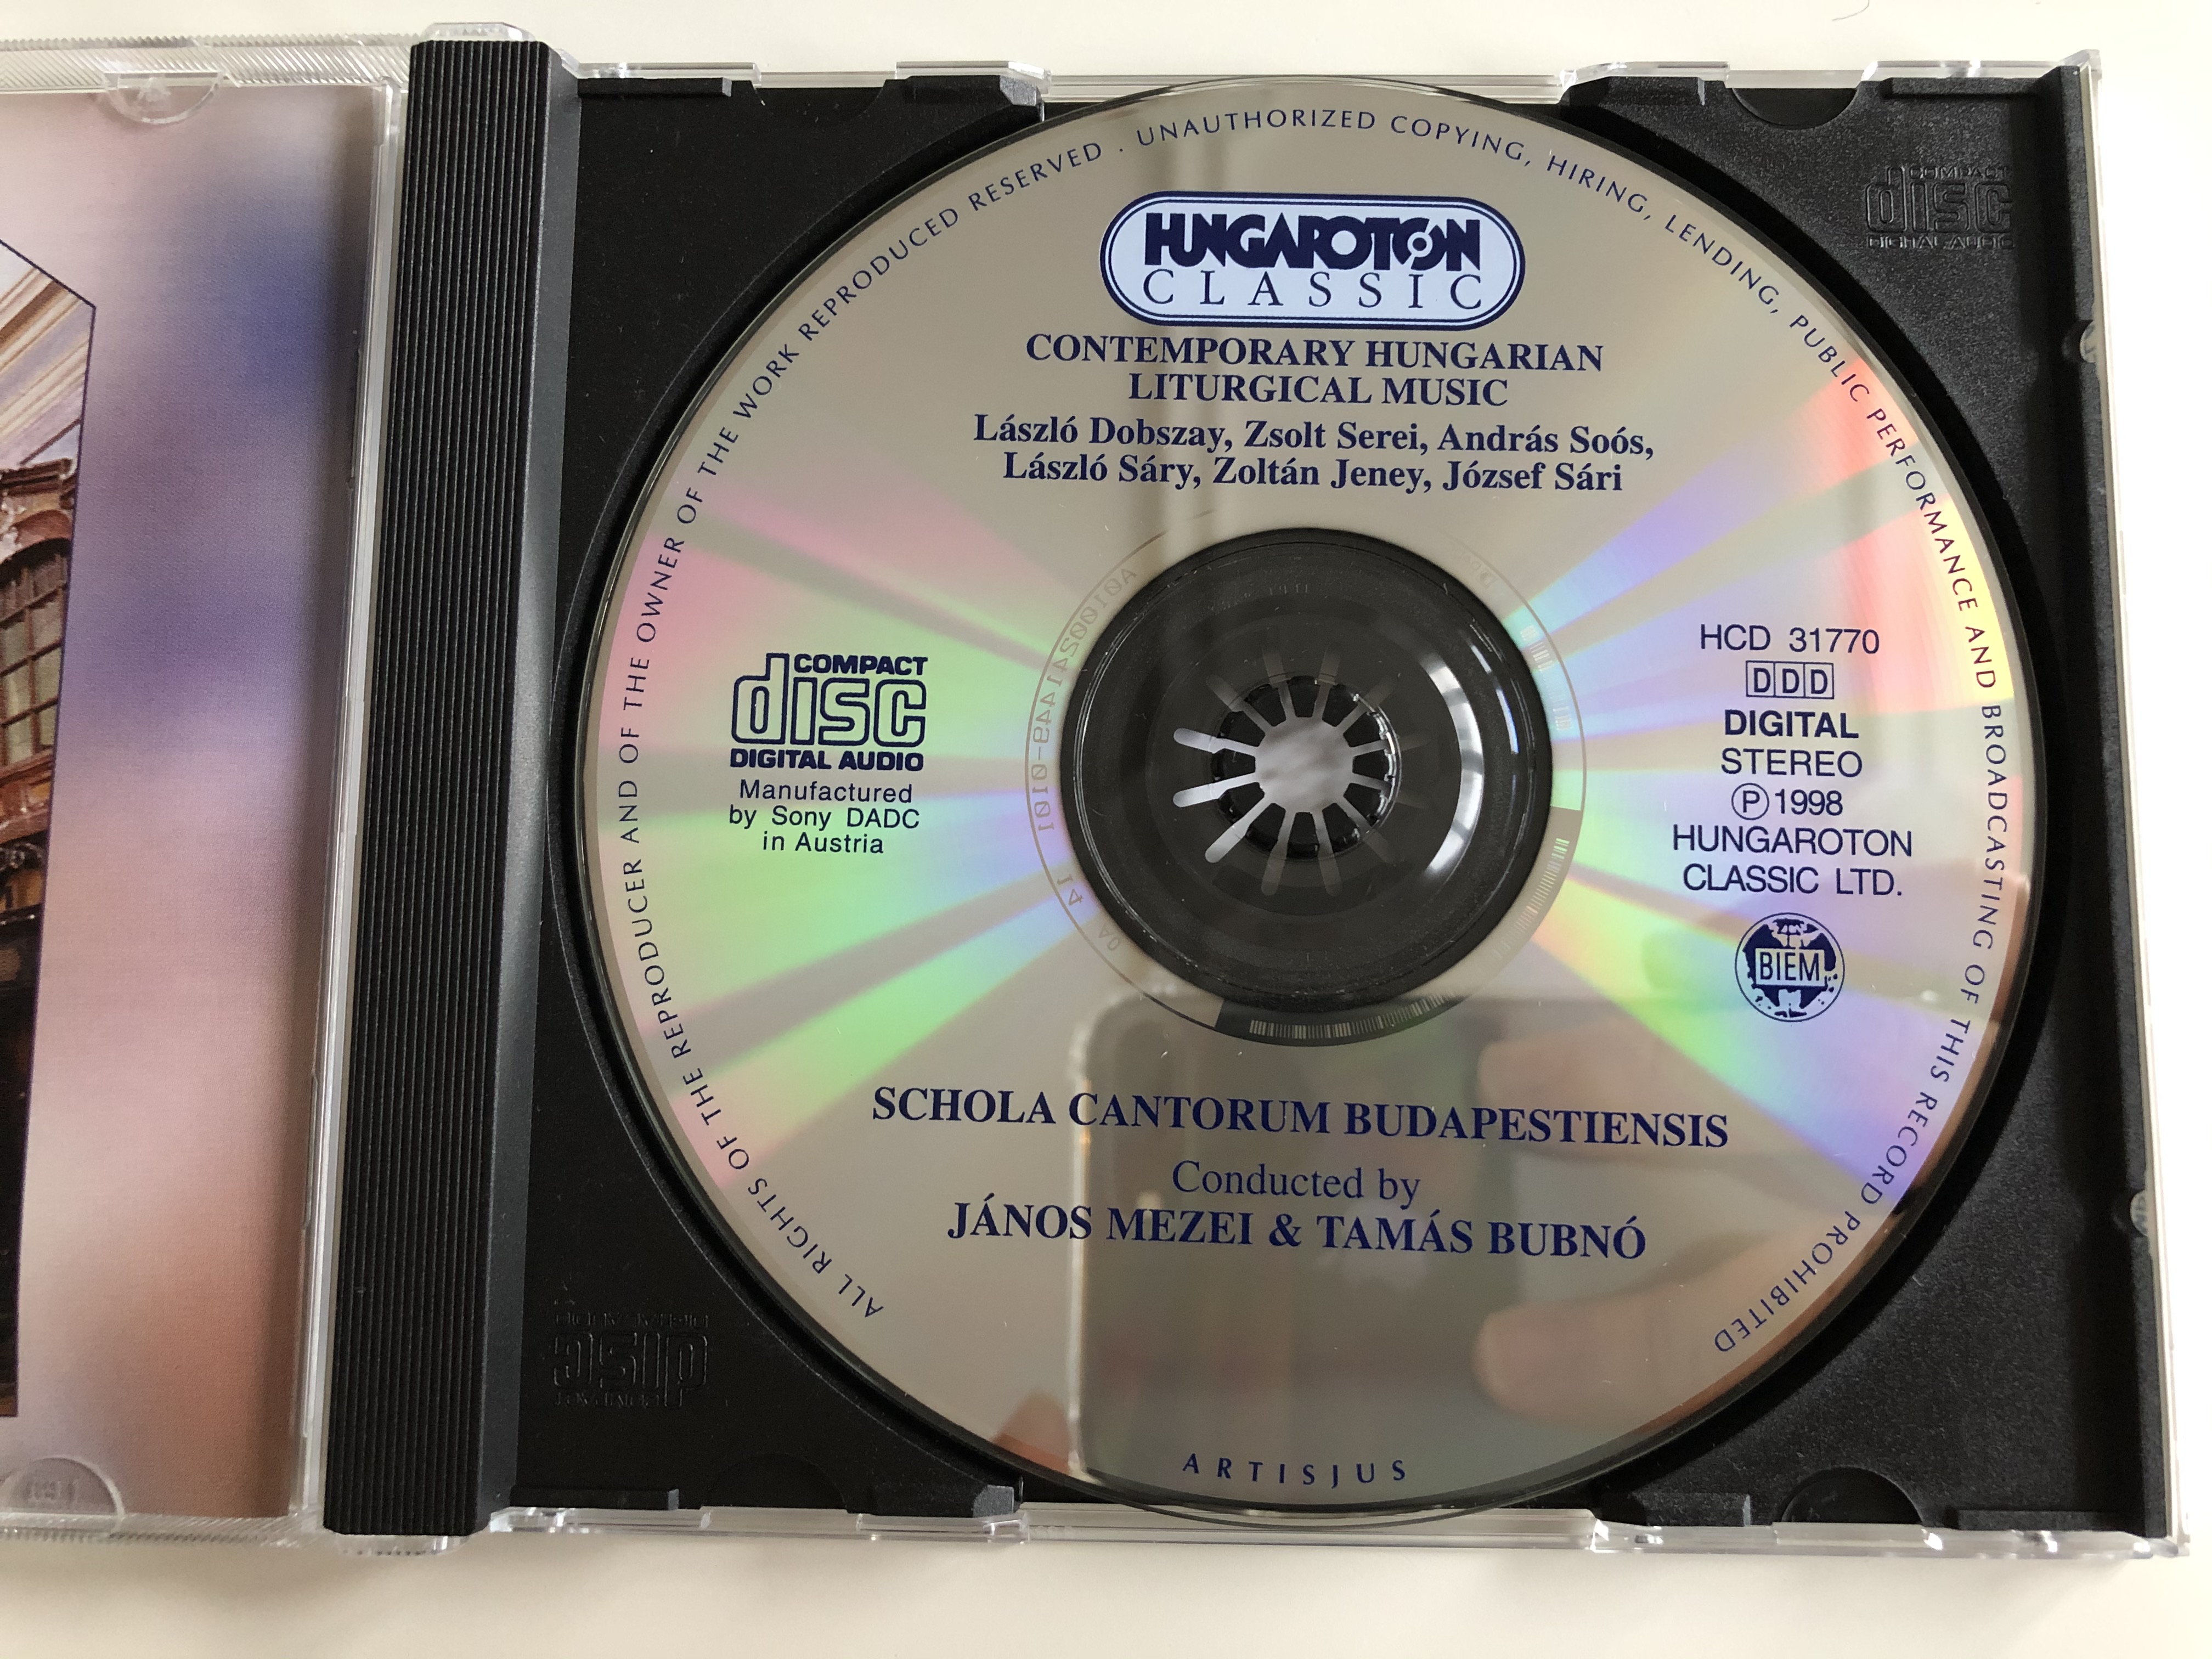 contemporary-hungarian-liturgical-music-schola-cantorum-budapestiensis-j-nos-mezei-and-tam-s-bubn-hungaroton-classic-audio-cd-1998-stereo-hcd-31770-13-.jpg